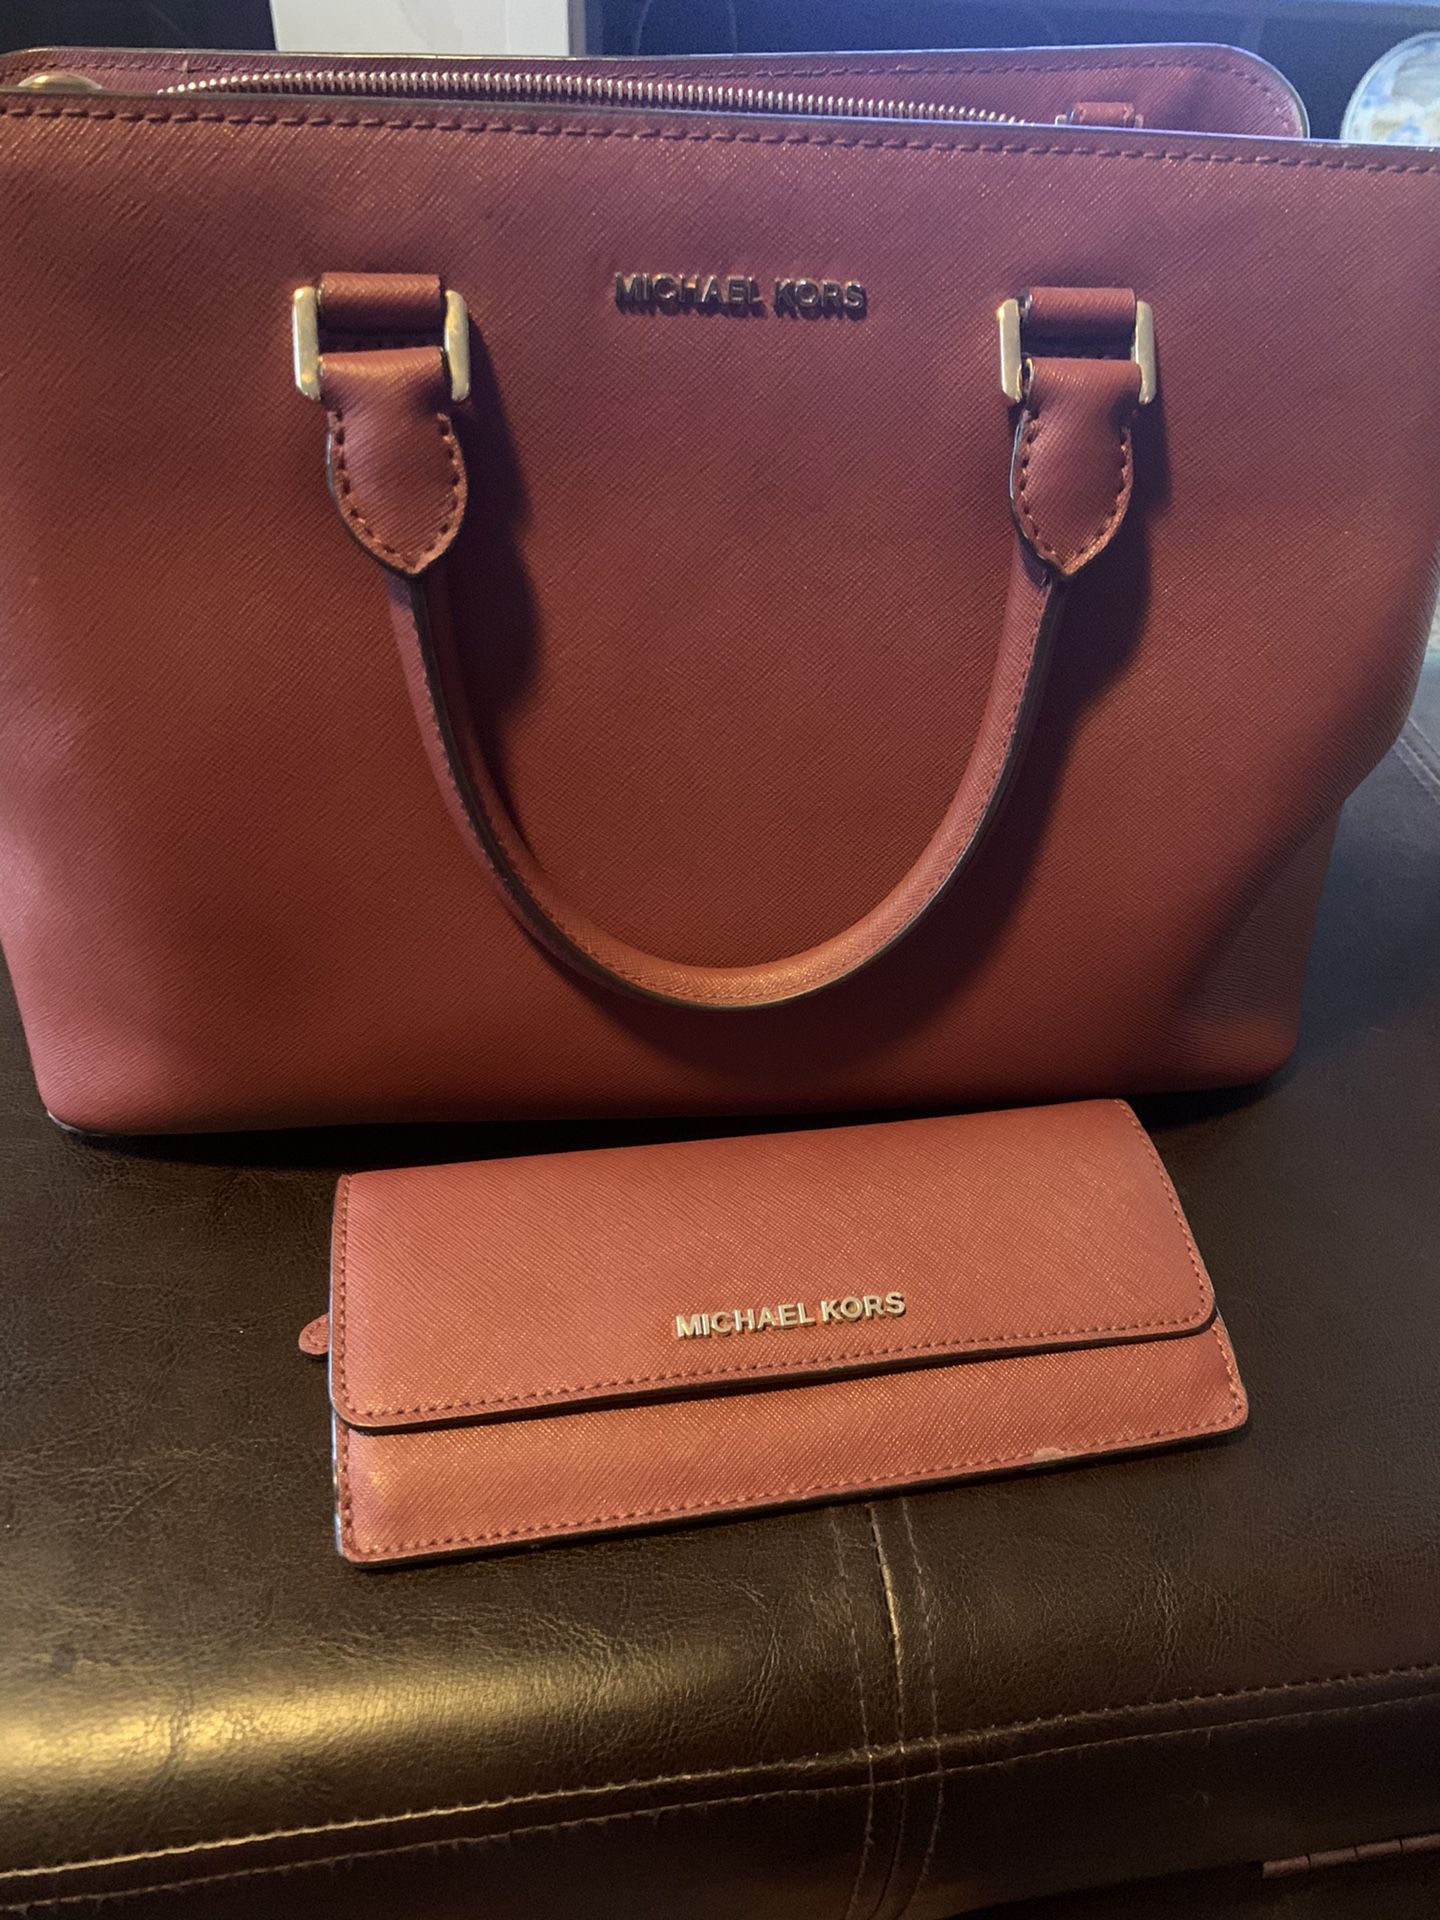 Michael Kors bag with wallet